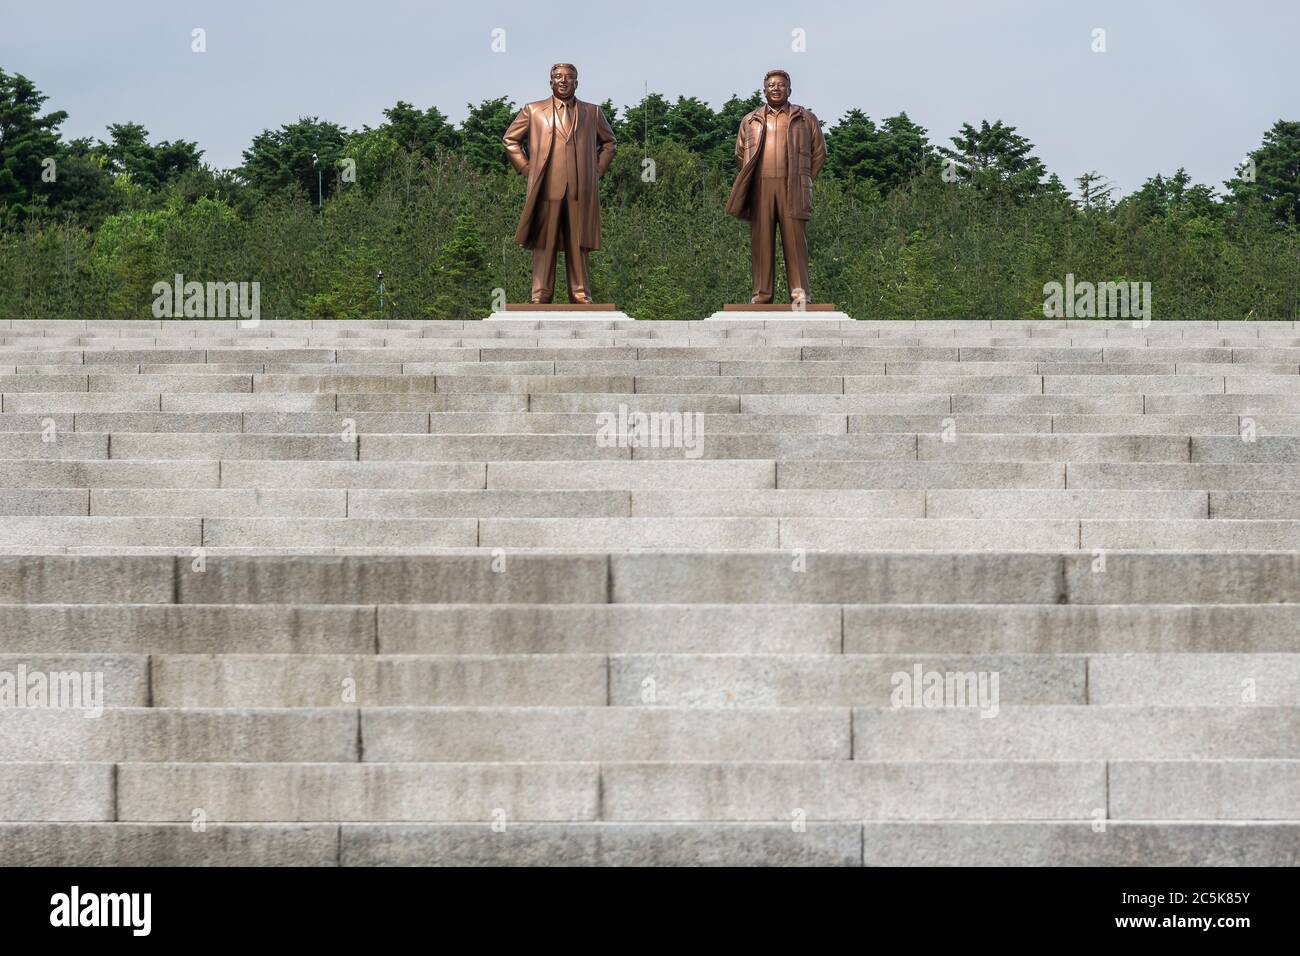 Statues of North Korean leaders Kim Il-sung and Kim Jong-il. Kaesong, DPRK - North Korea Stock Photo